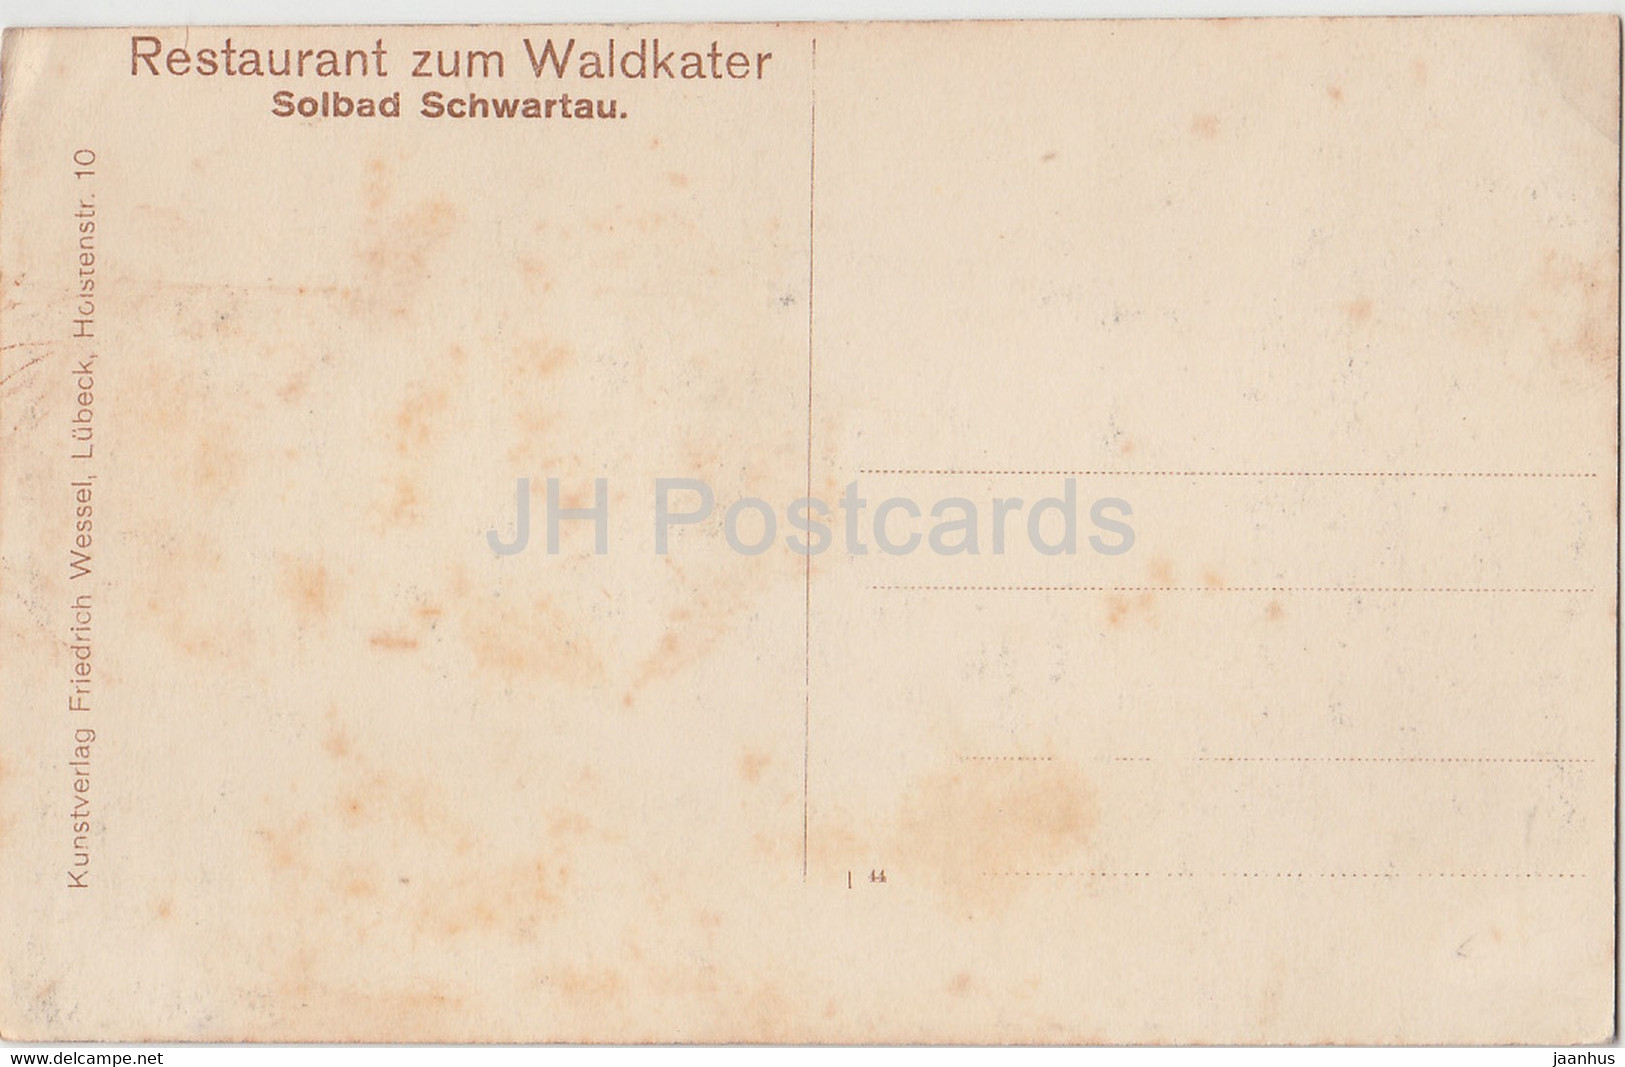 Solbad Schwartau - Restaurant Zum Waldkater - Old Postcard - Germany - Unused - Bad Schwartau